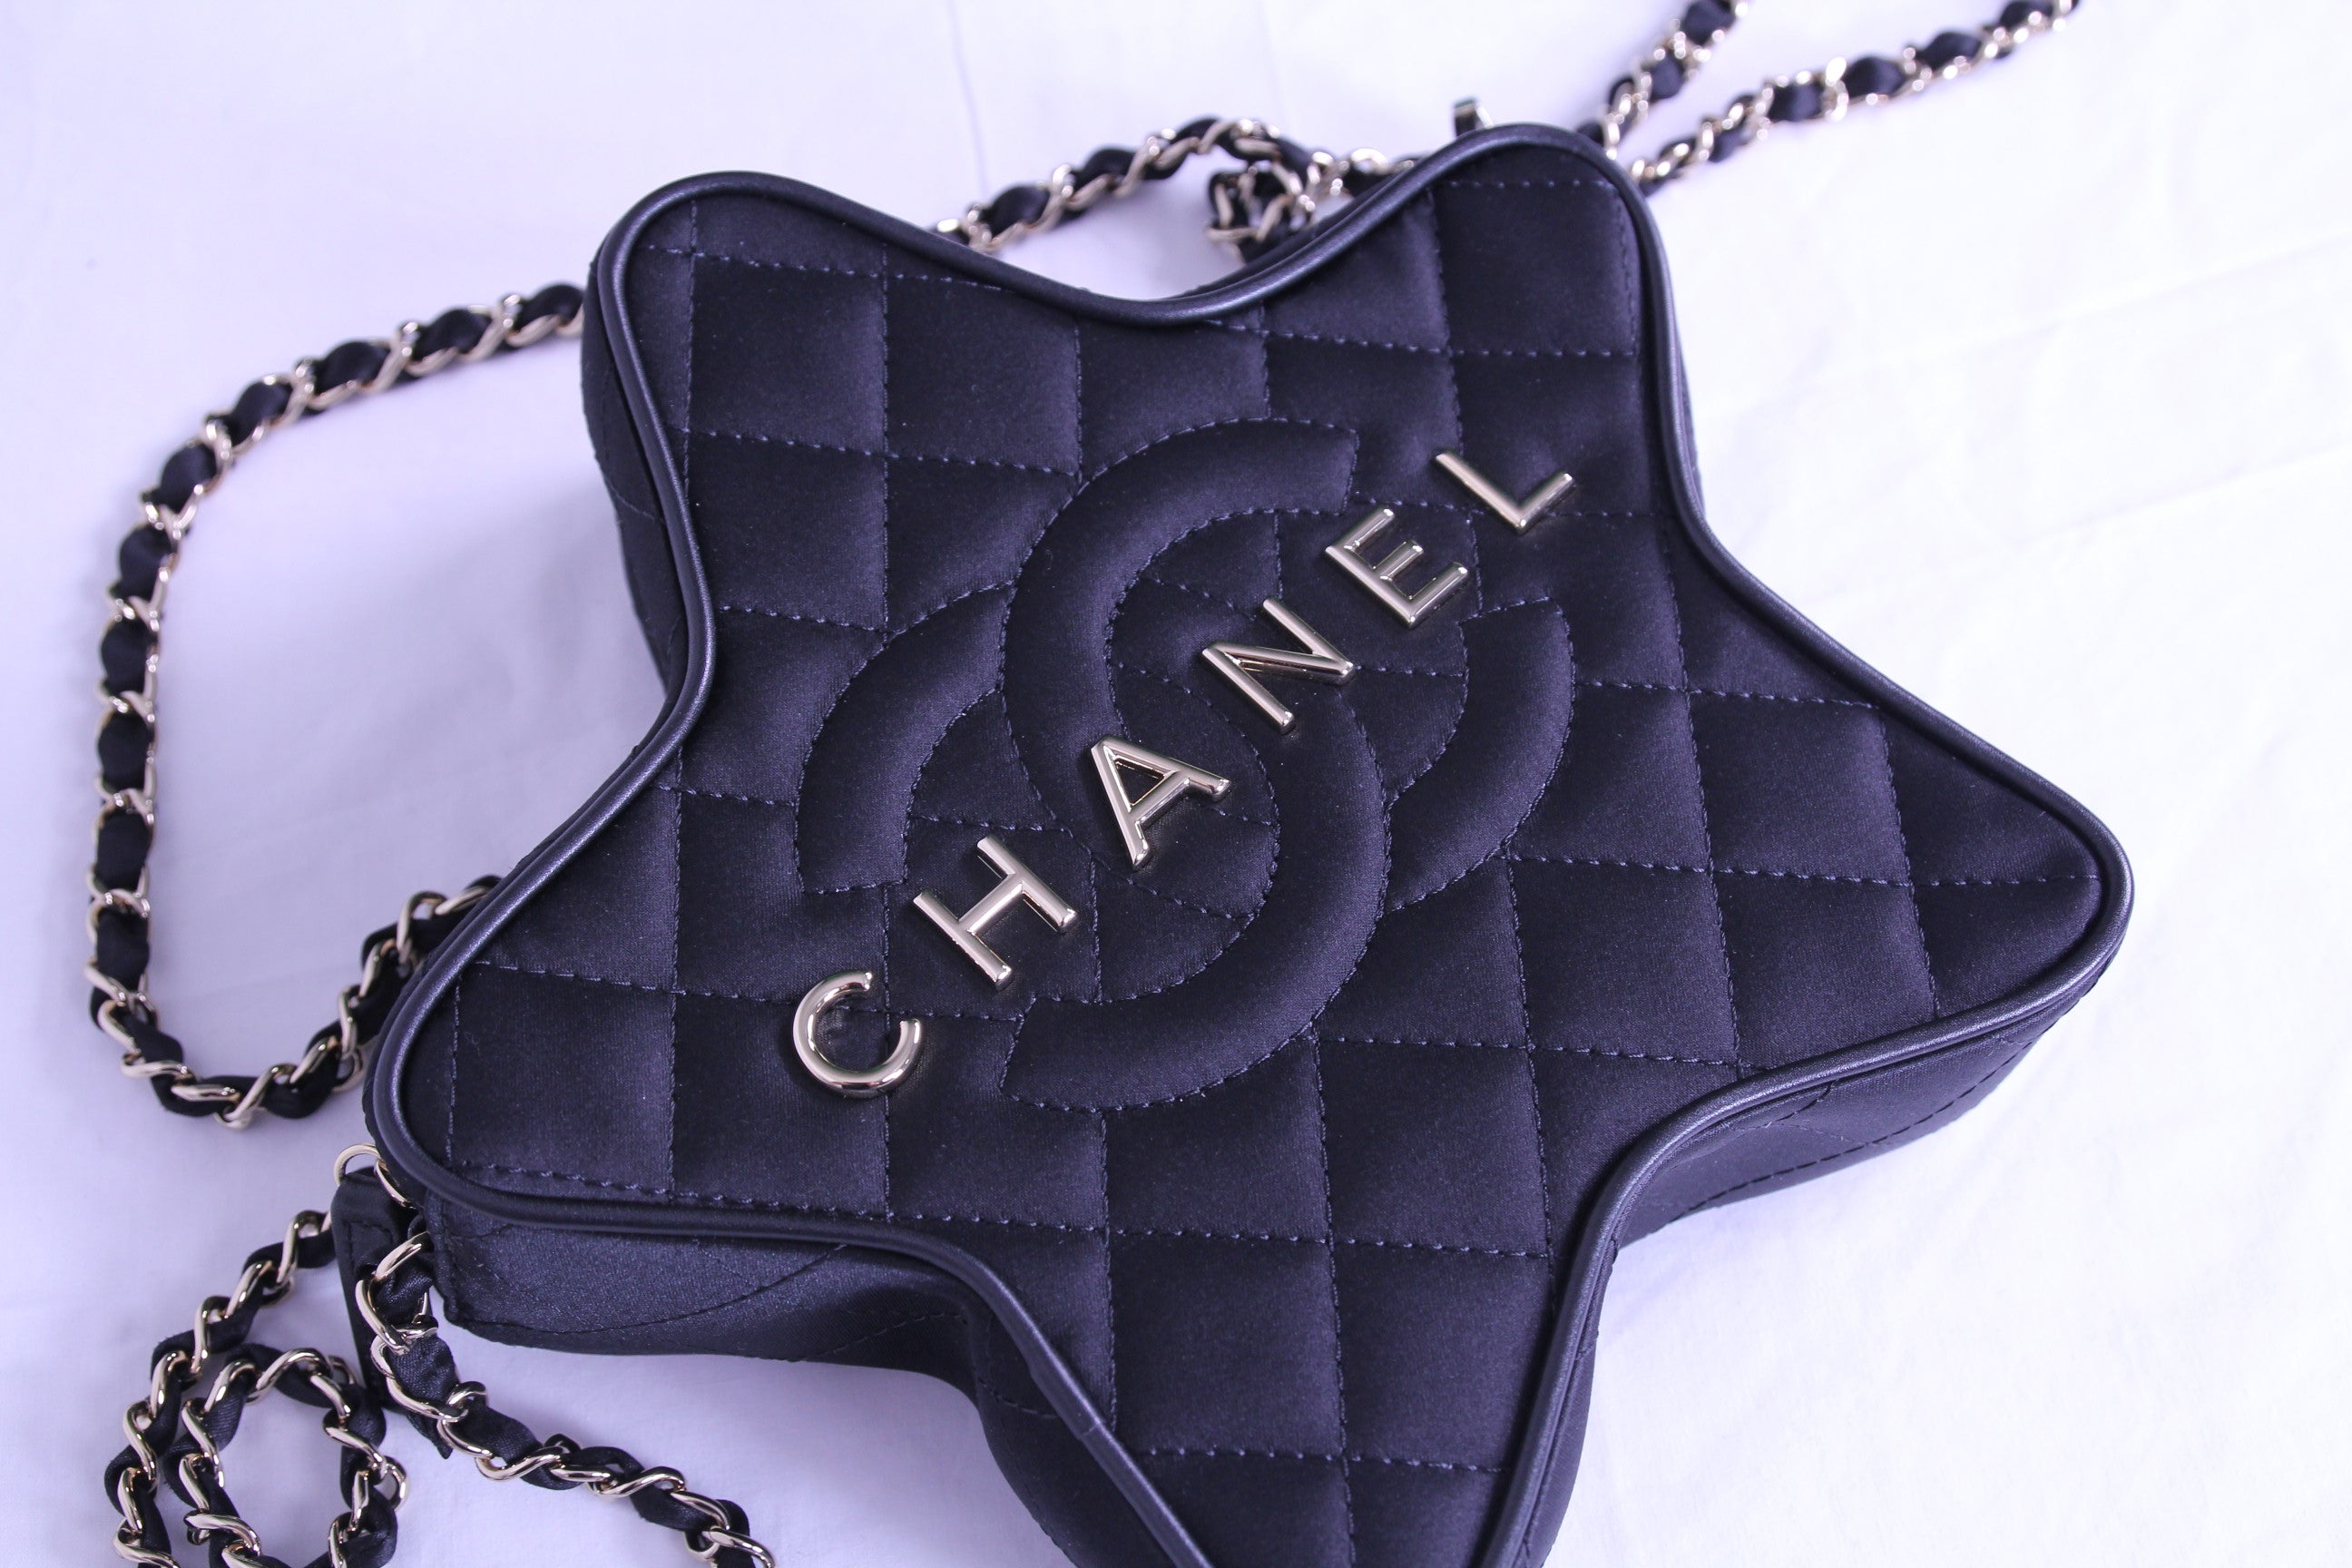 Front of Chanel star handbag in finished in black satin